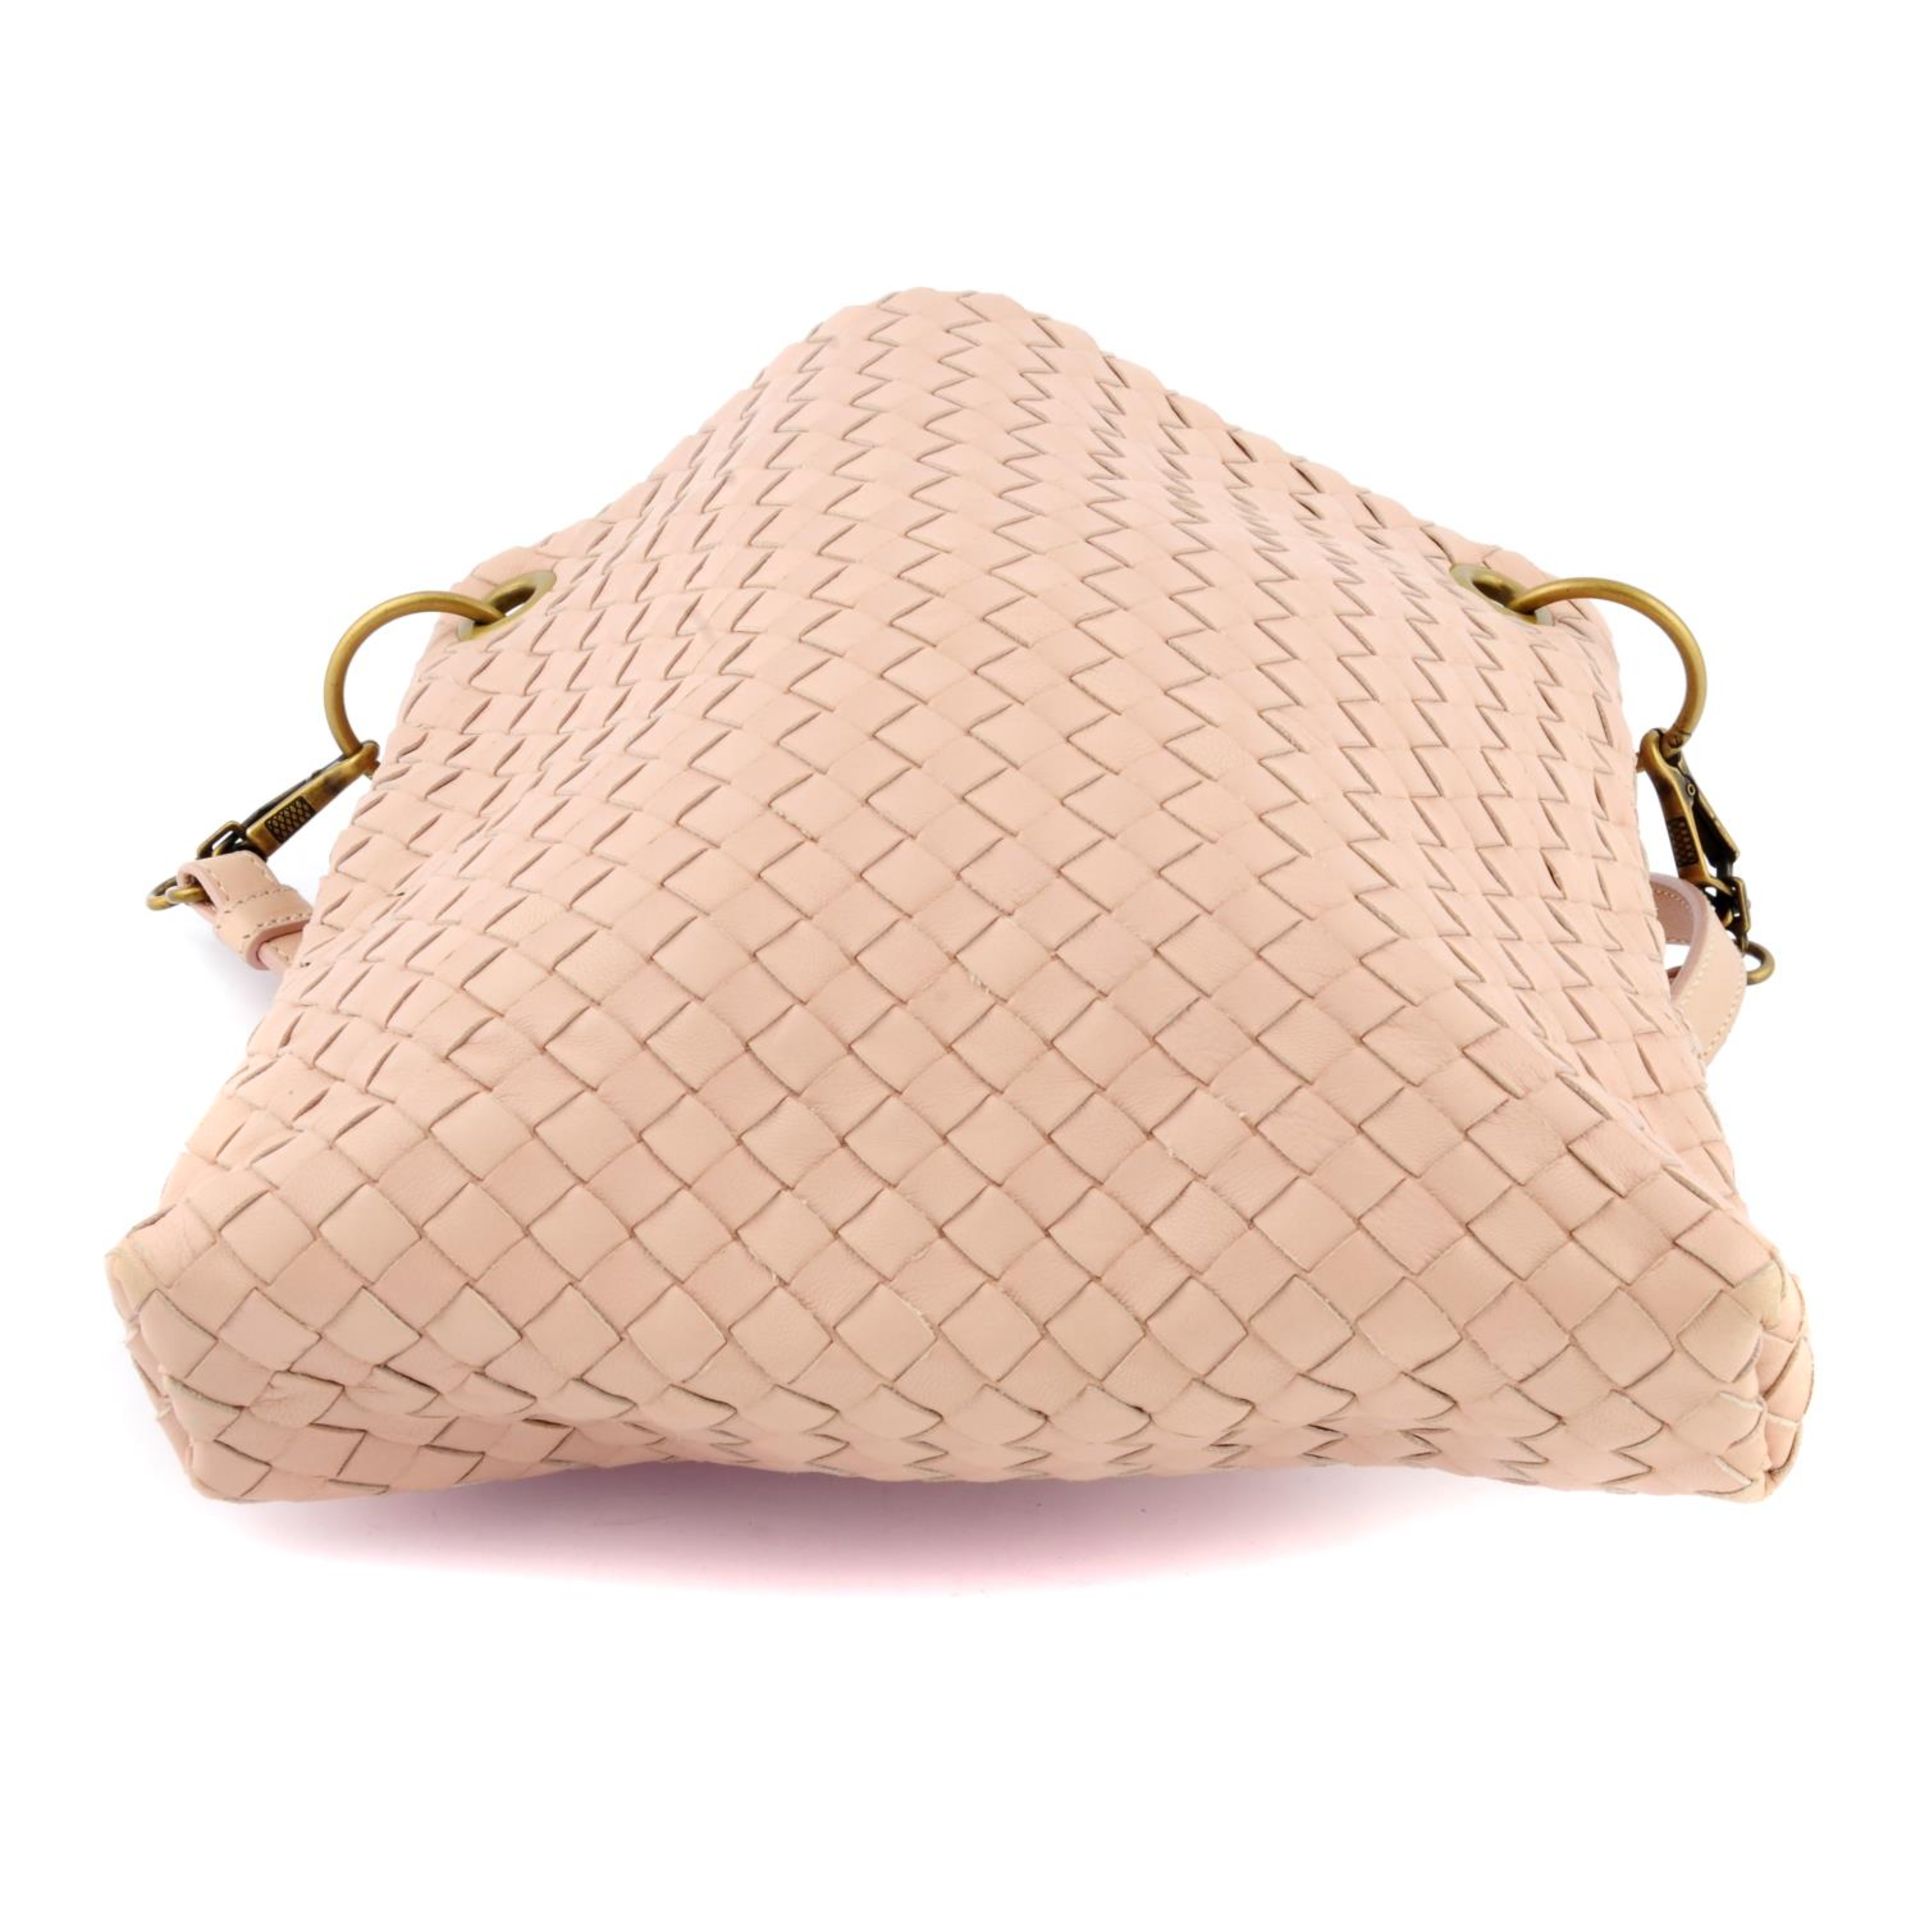 BOTTEGA VENETA - a blush pink Intrecciato crossbody handbag. - Image 4 of 4